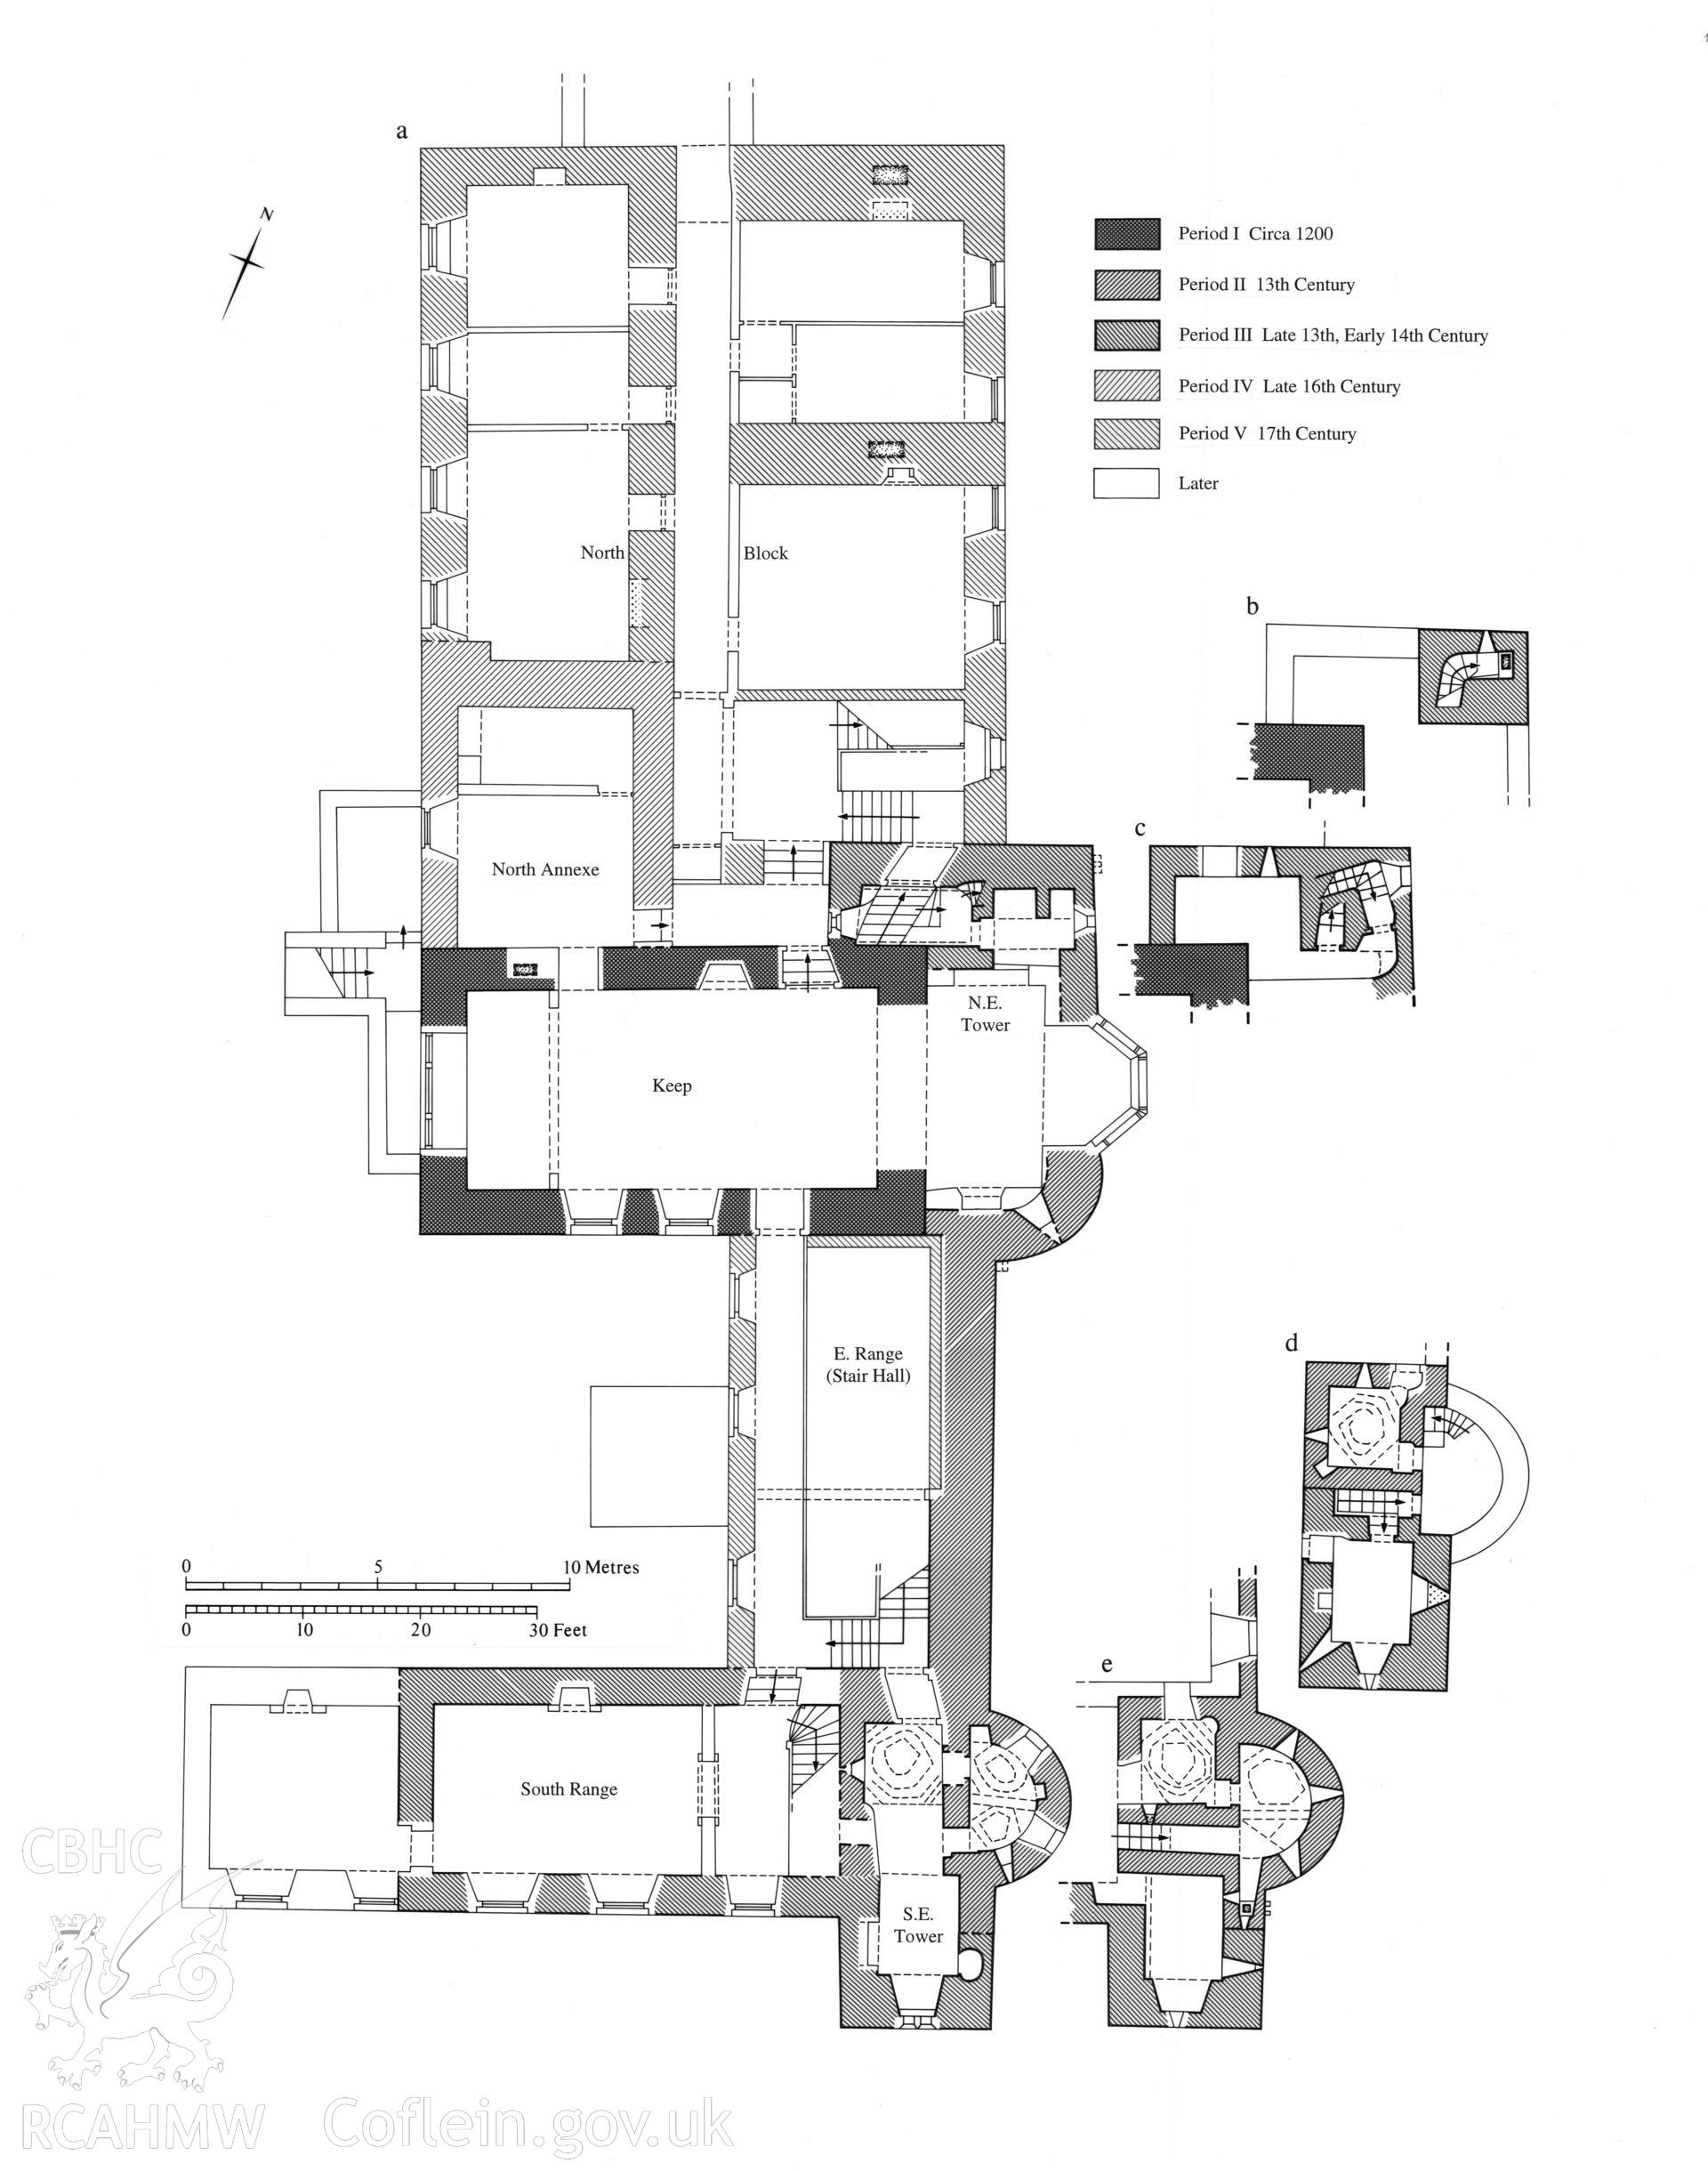 Digital copy of a measured plan of first floor of Fonmon Castle, Rhoose, Later Castles, fig 80.